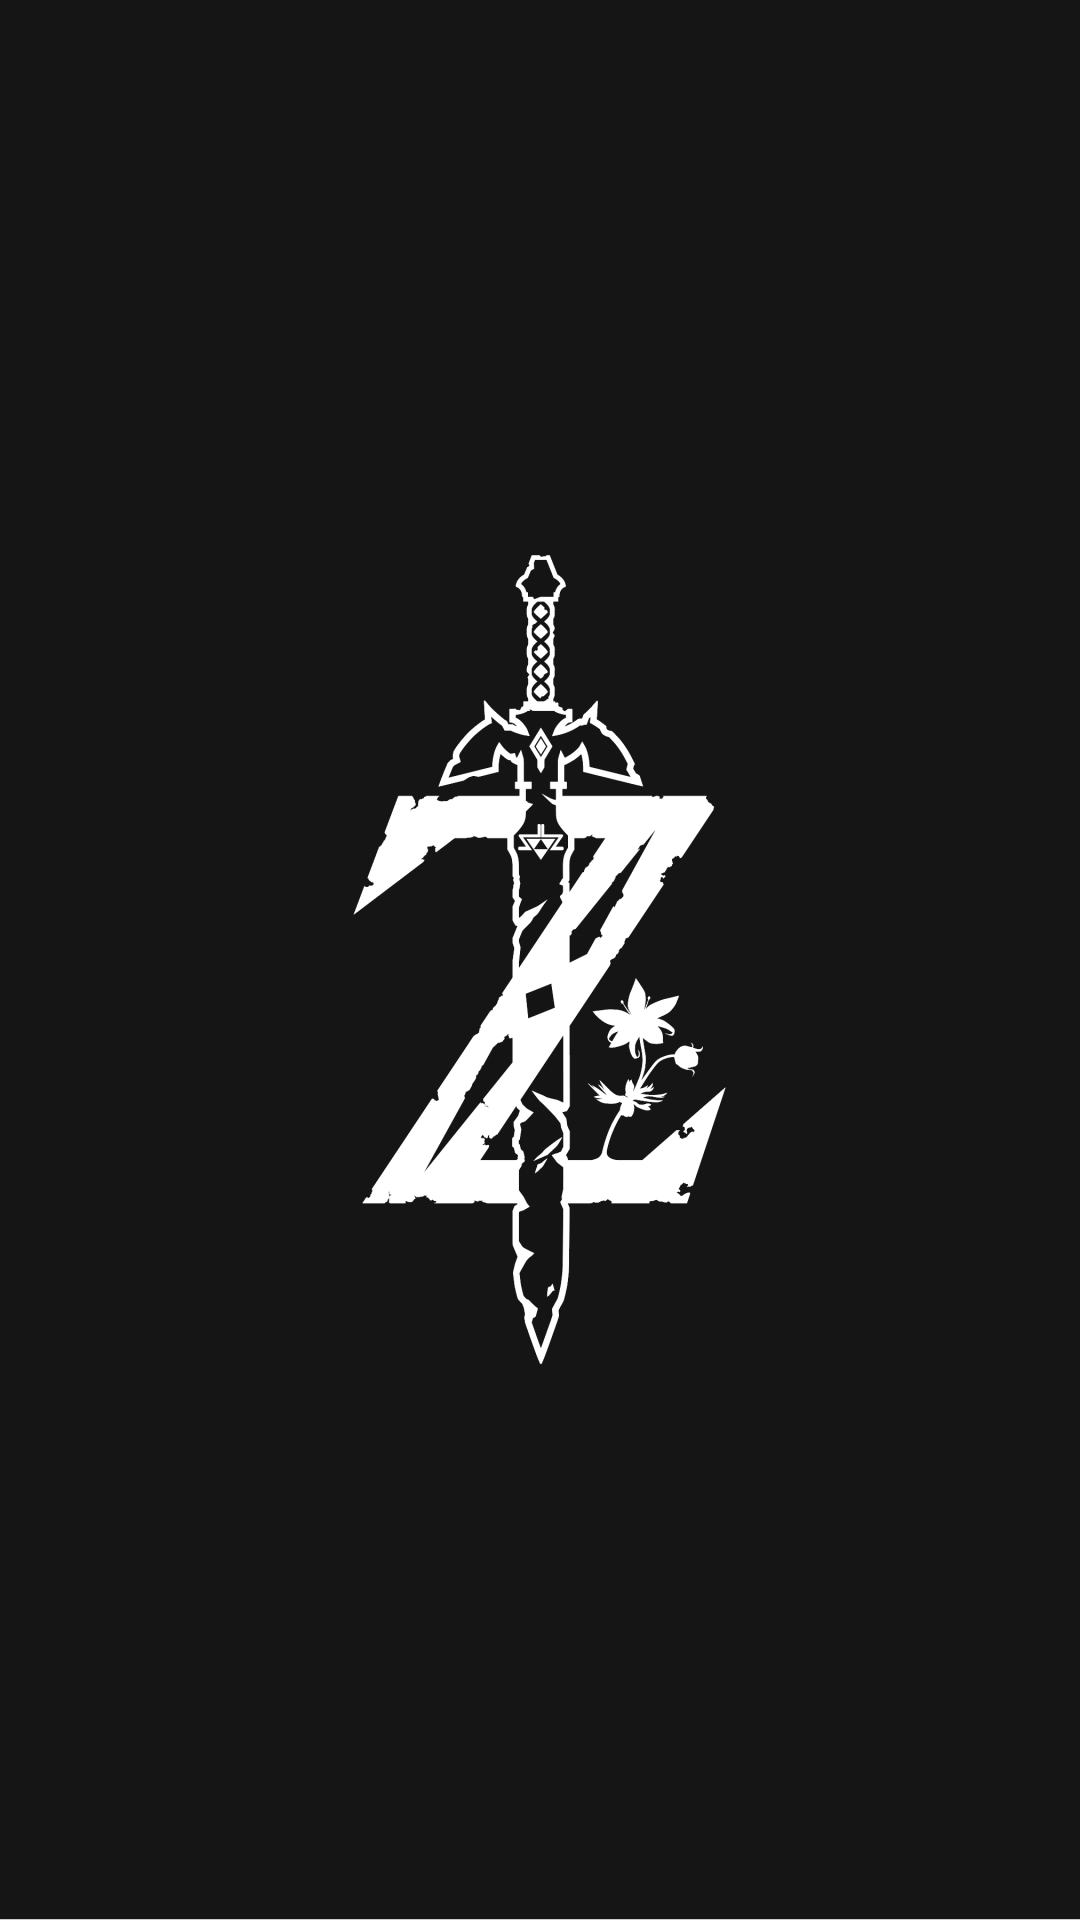 Dark Zelda wallpaper. Tatuajes zelda, Zelda fondo de pantalla, Fondos de pantalla de juegos